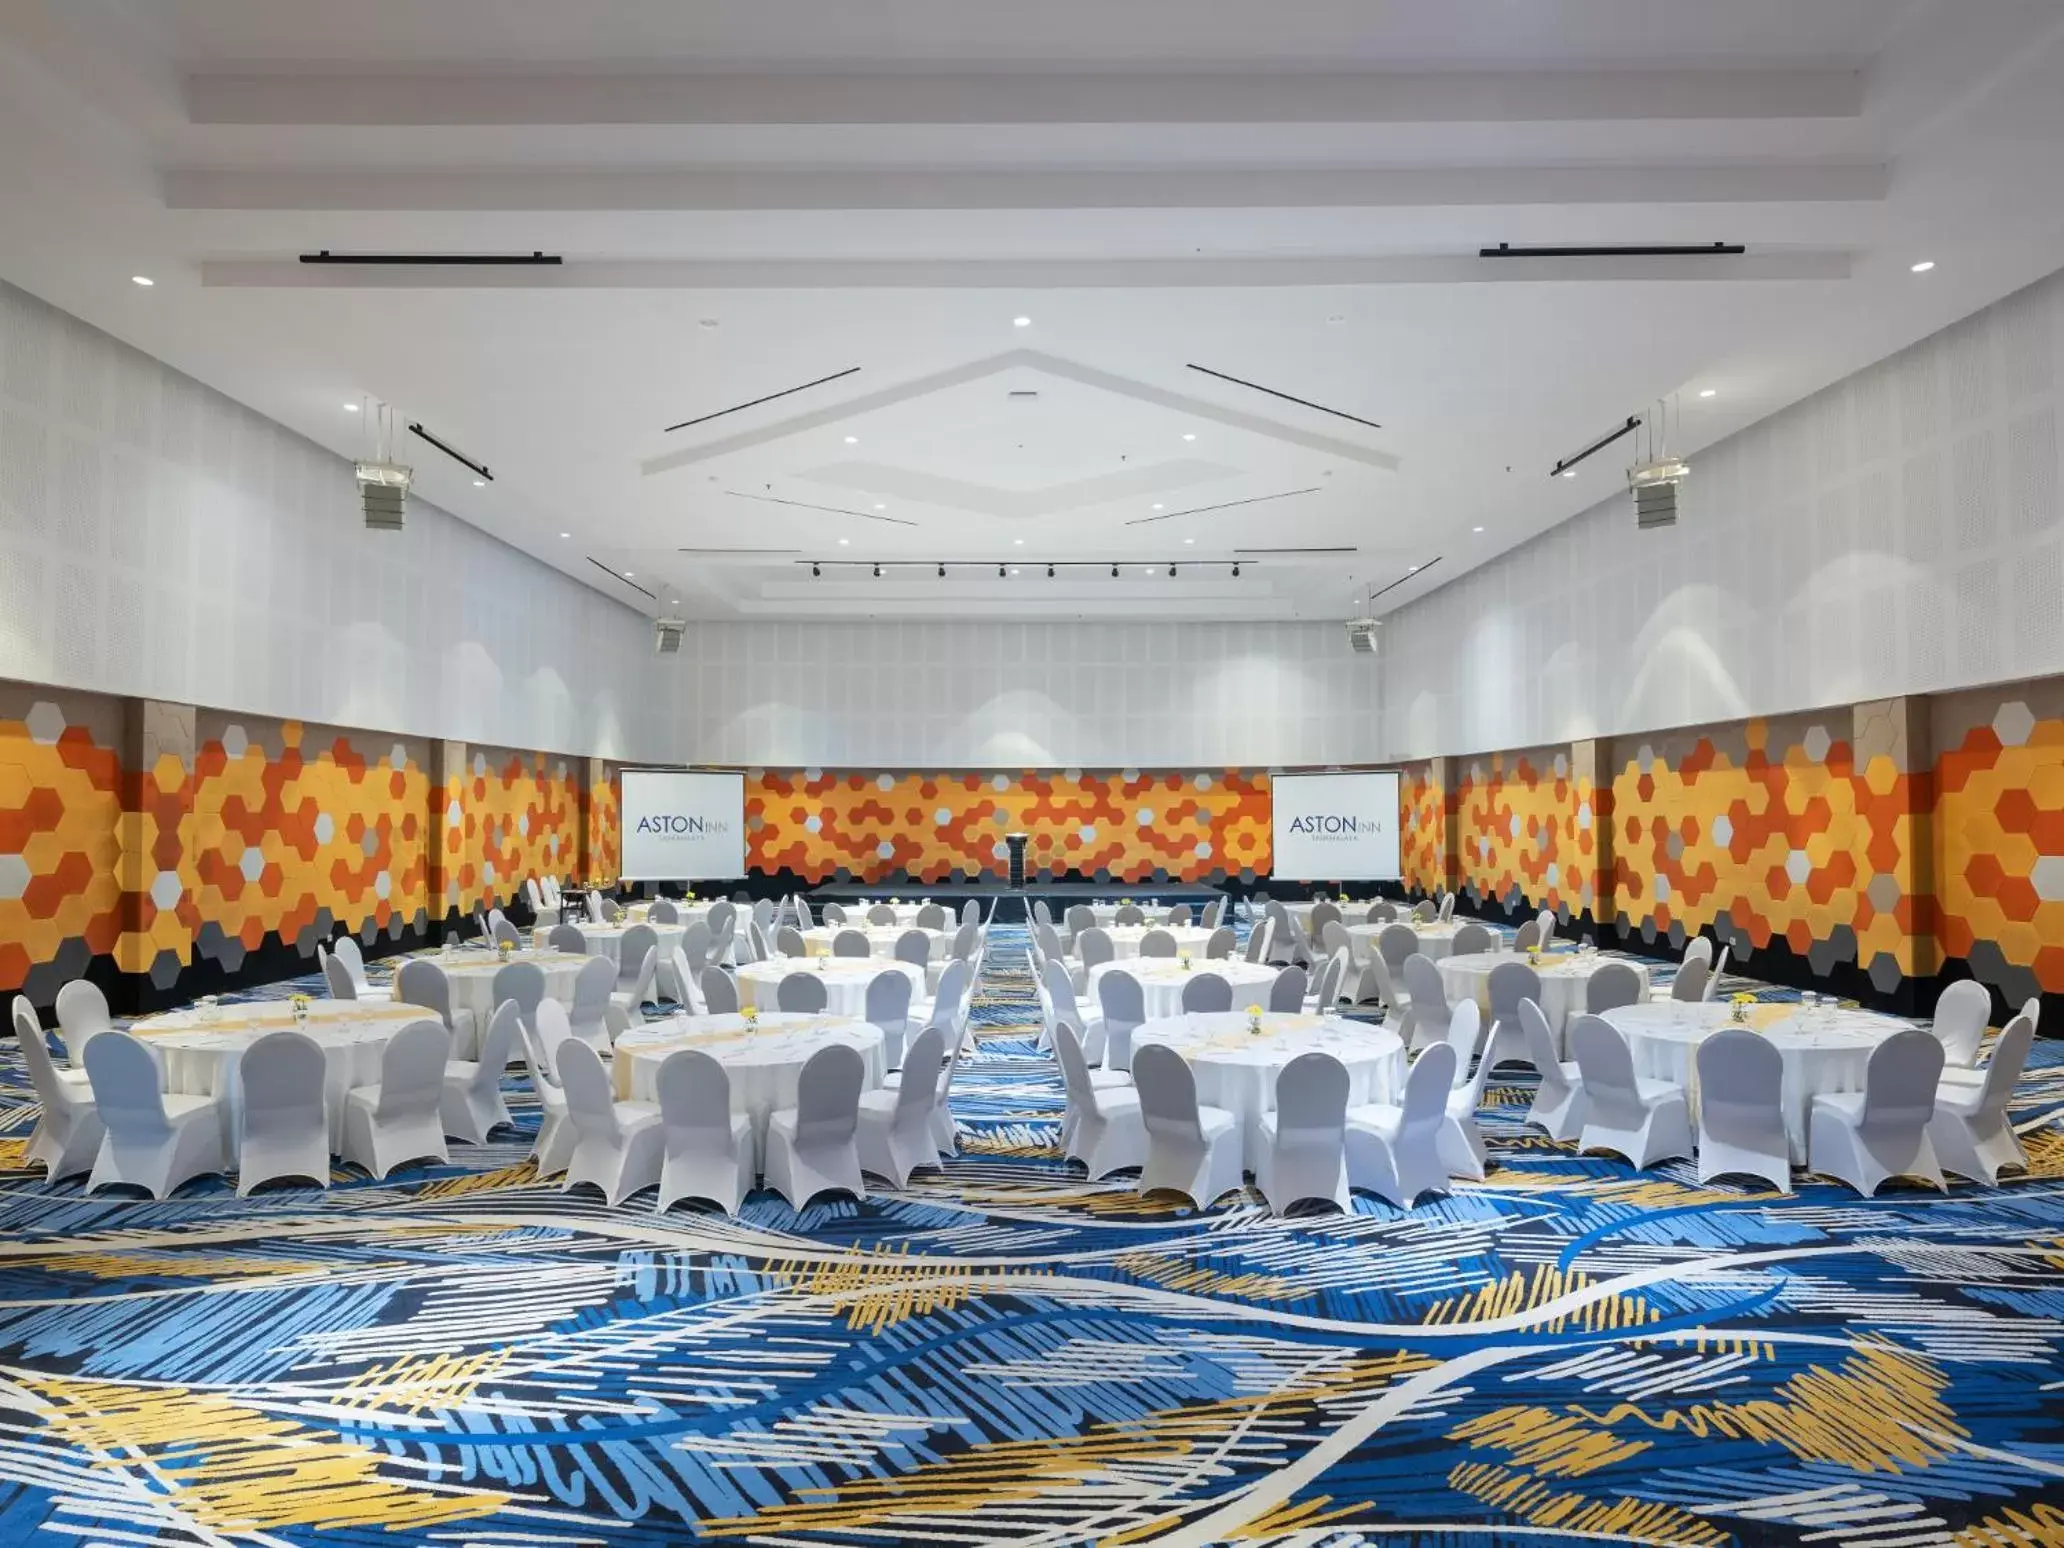 Meeting/conference room, Banquet Facilities in favehotel Tasikmalaya